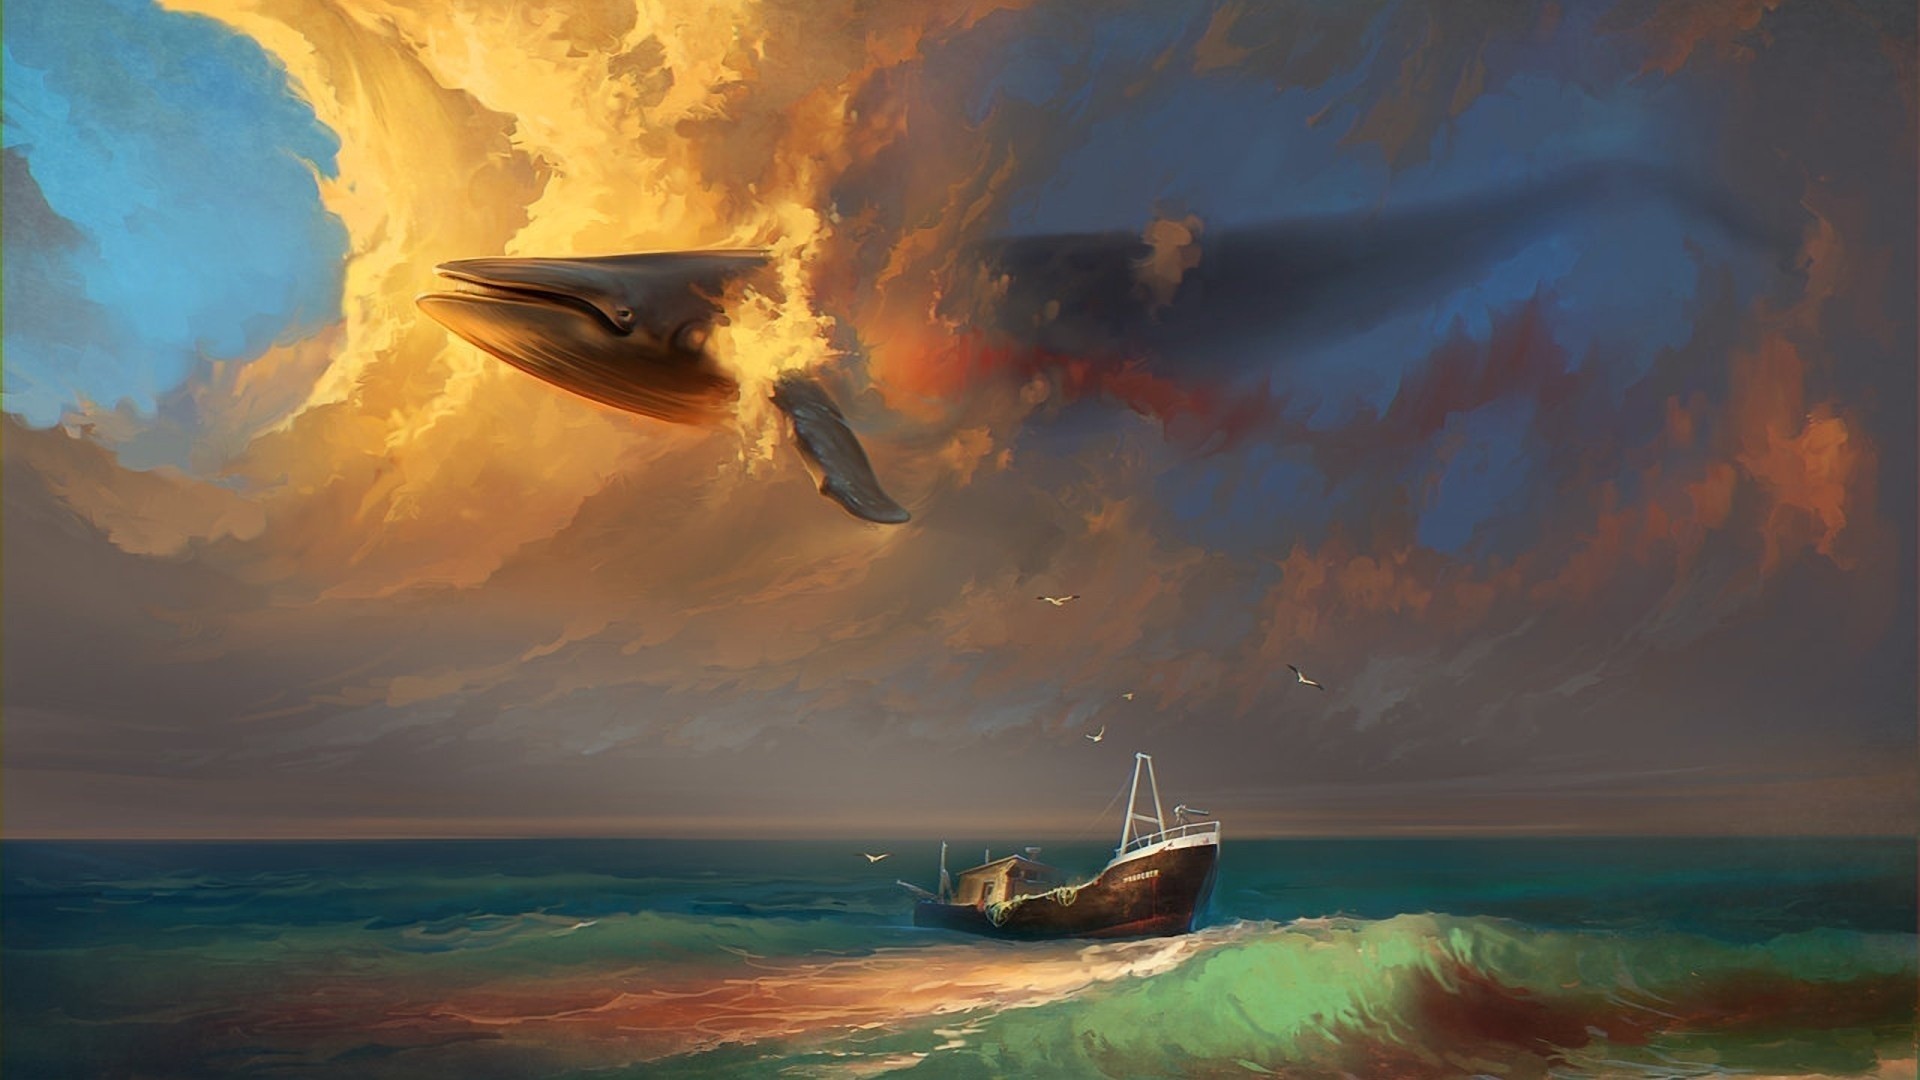 1920x1080 Boats Shipwreck Animals Sad Clouds Ships Artistic Surreal Vehicles Emotion  Fantasy Ocean Dream Whales Wreck Rhads Digital Beaches Painting Sky Ruins  Sea Art ...